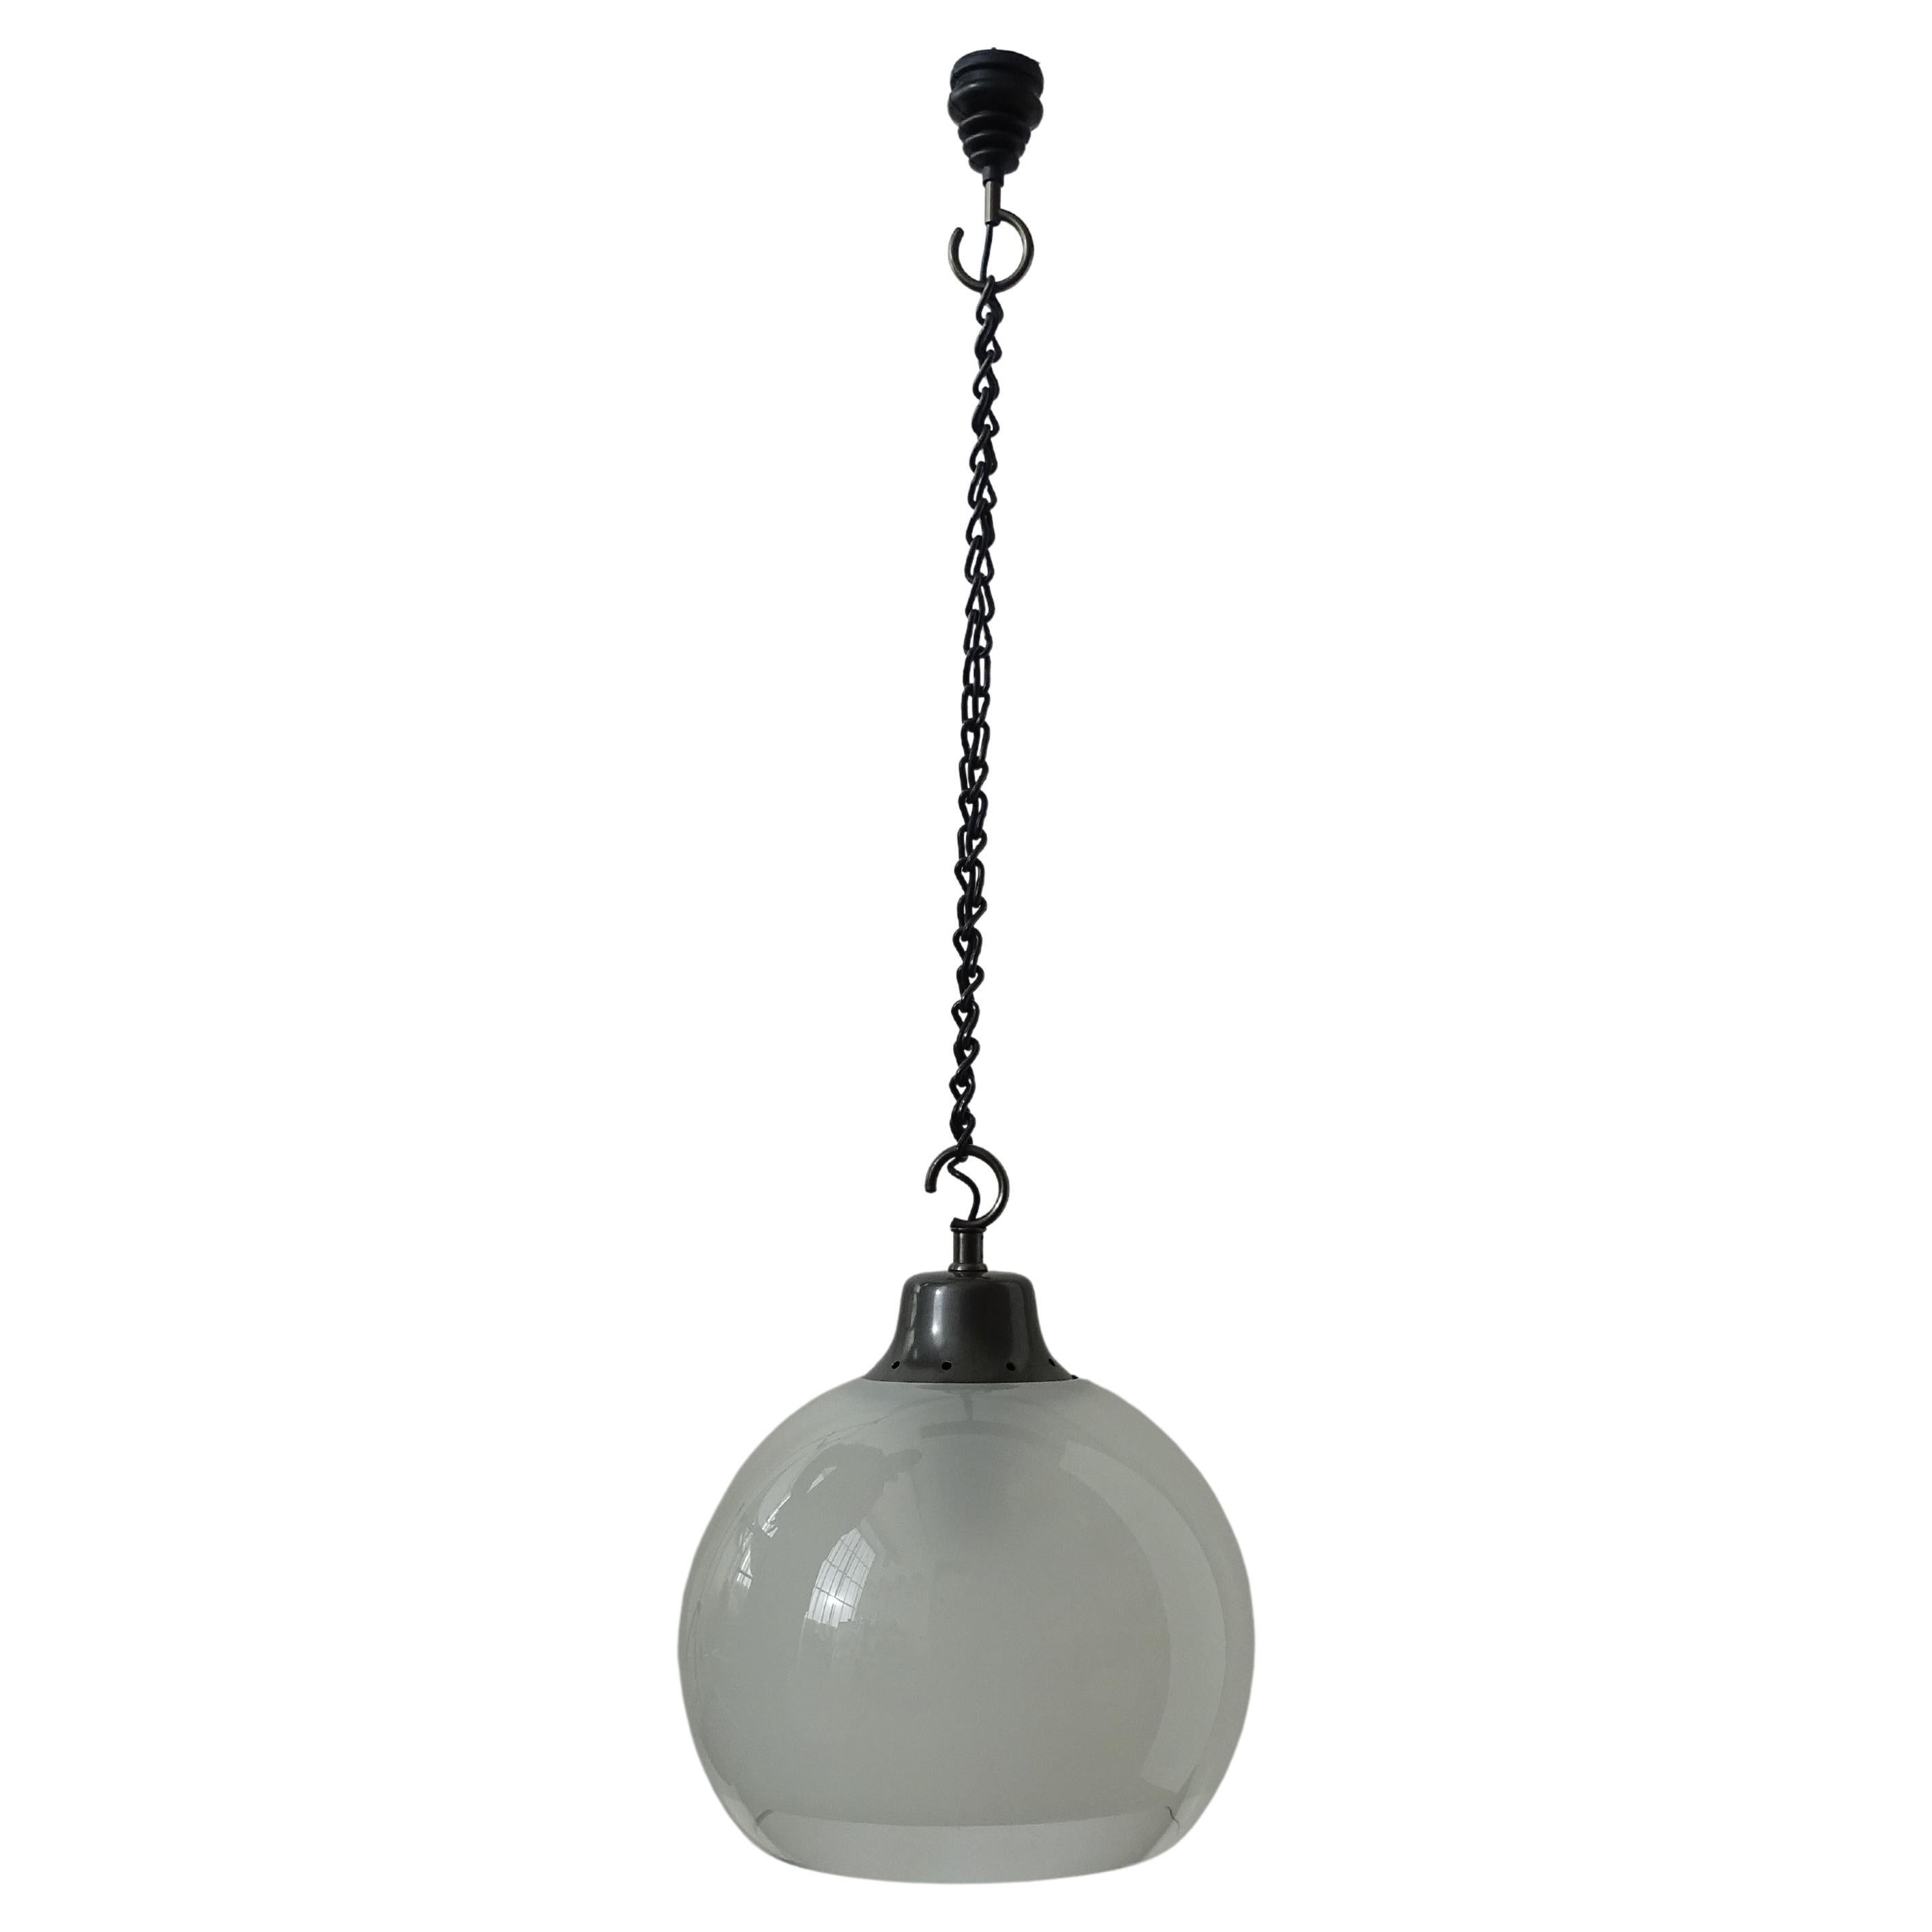 Luigi Caccia Dominioni LS10 Ceiling Lamp for Azucena, Italy, 1960s For Sale